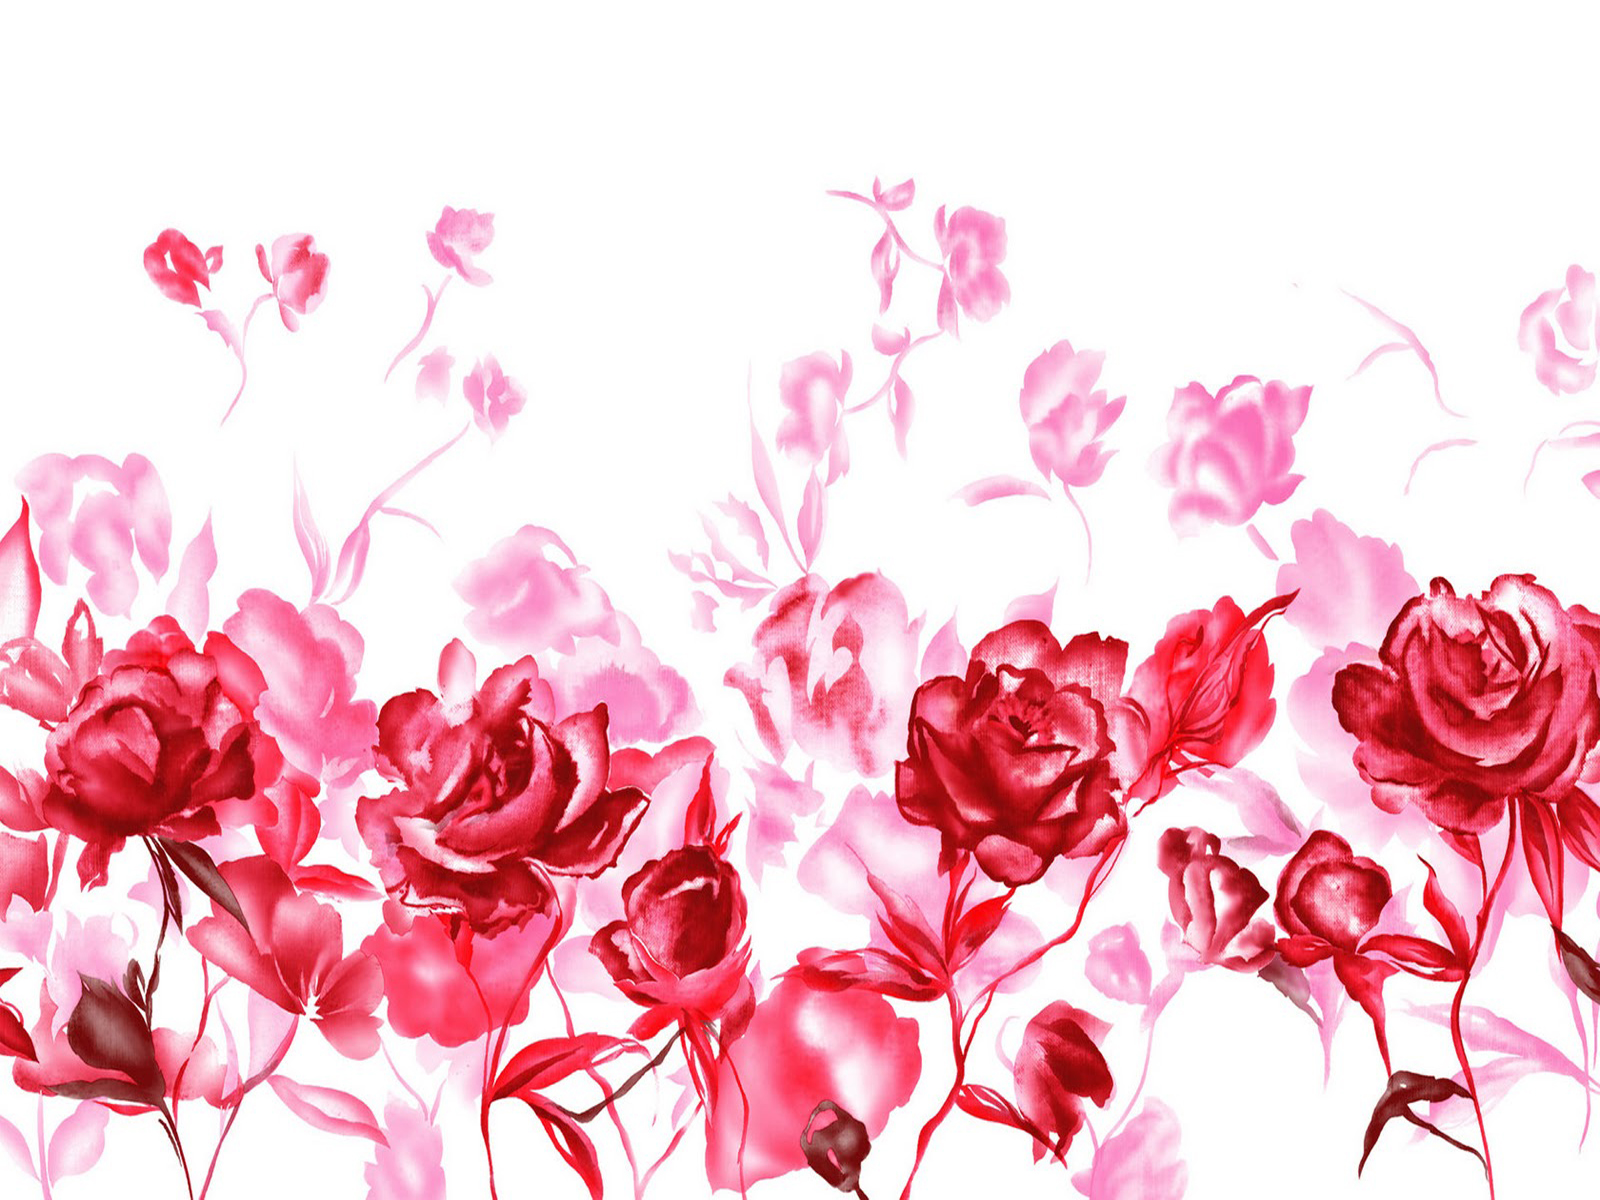 happy rose day wallpaper,pink,garden roses,petal,flower,red